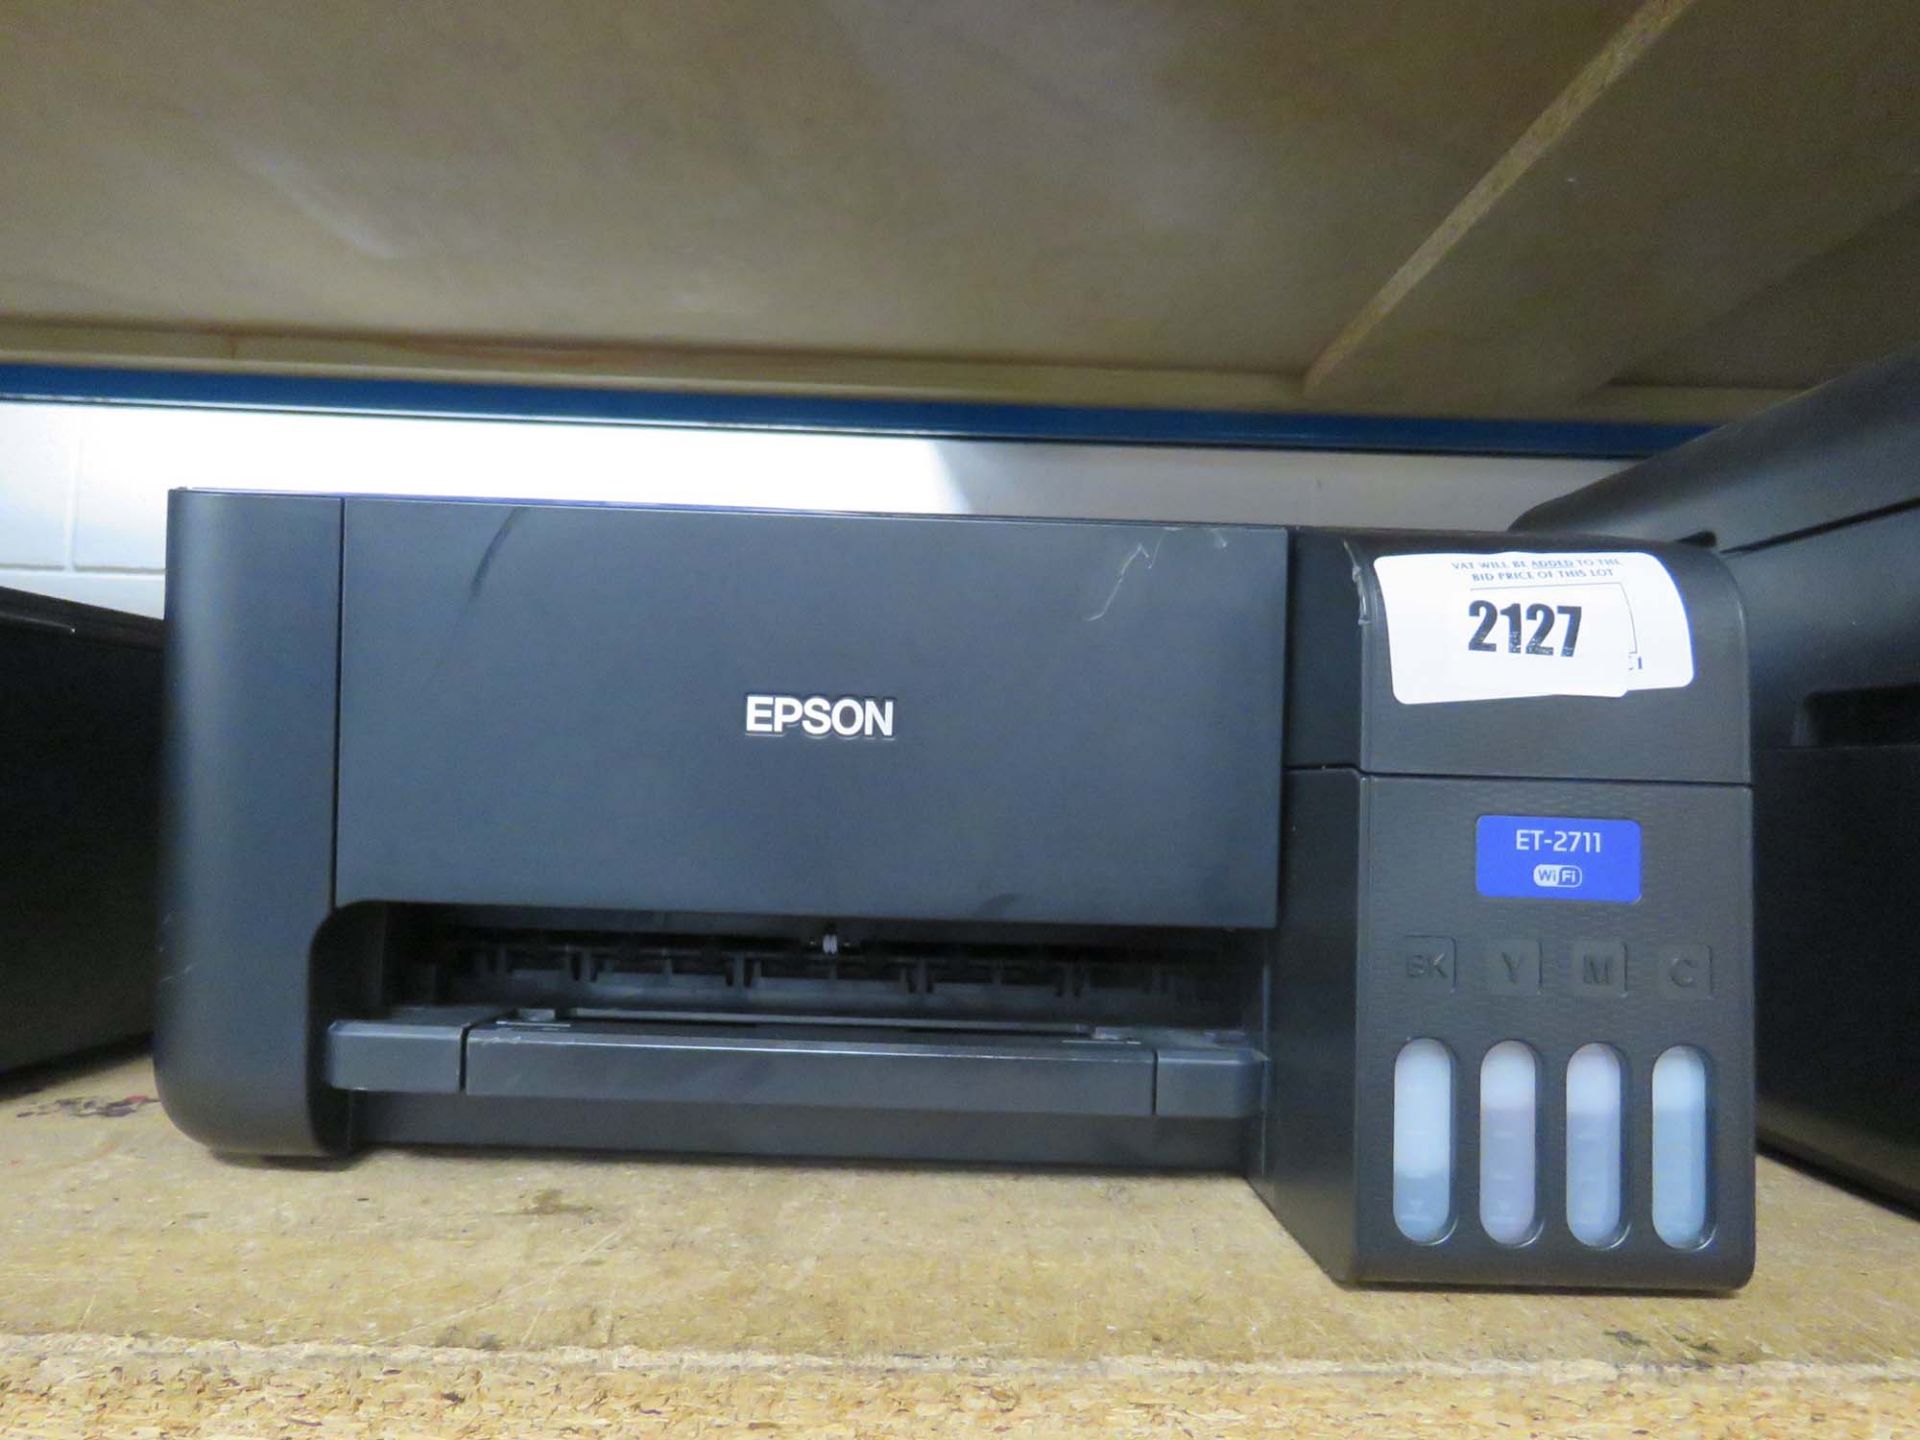 Epson Ecotank ET2711 all in one printer